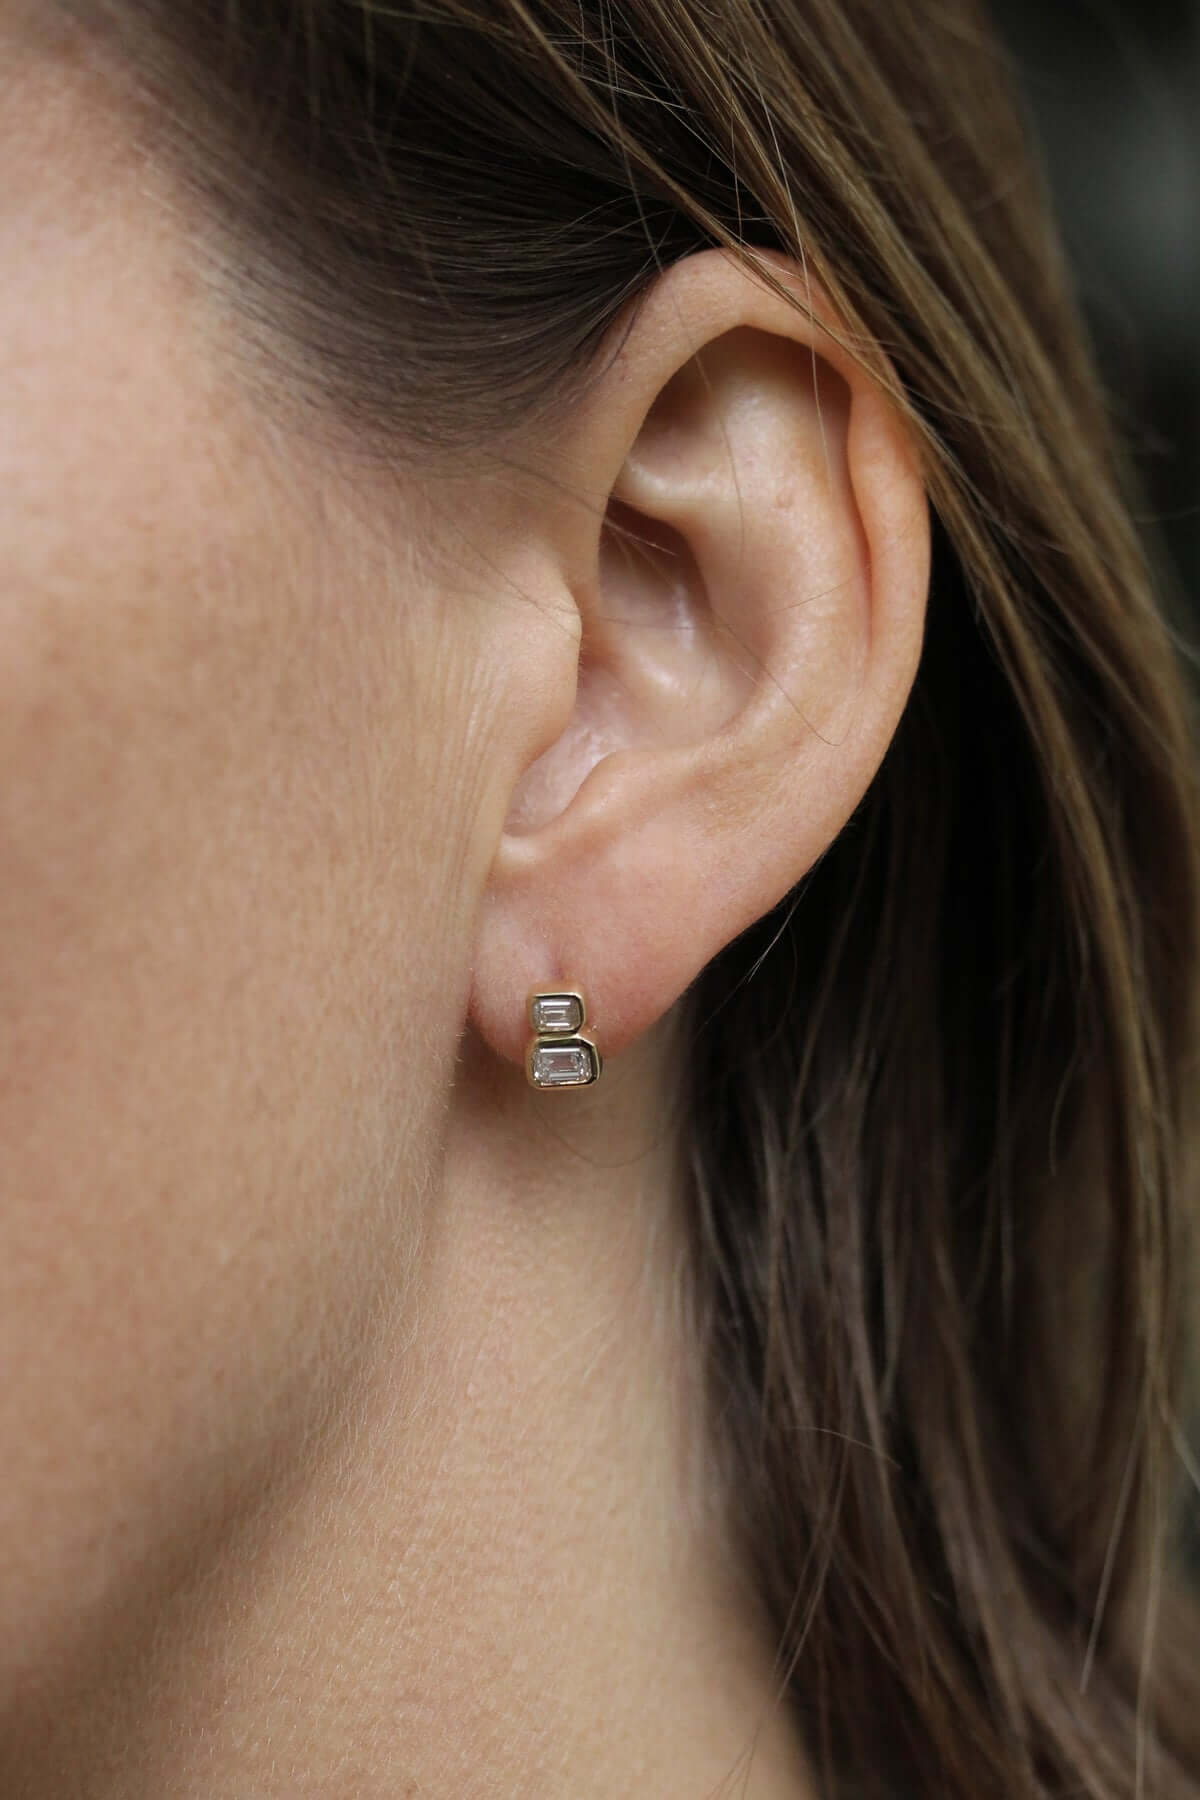 Emma Stone debuts Aupen's new jewelry line: Shop her earrings